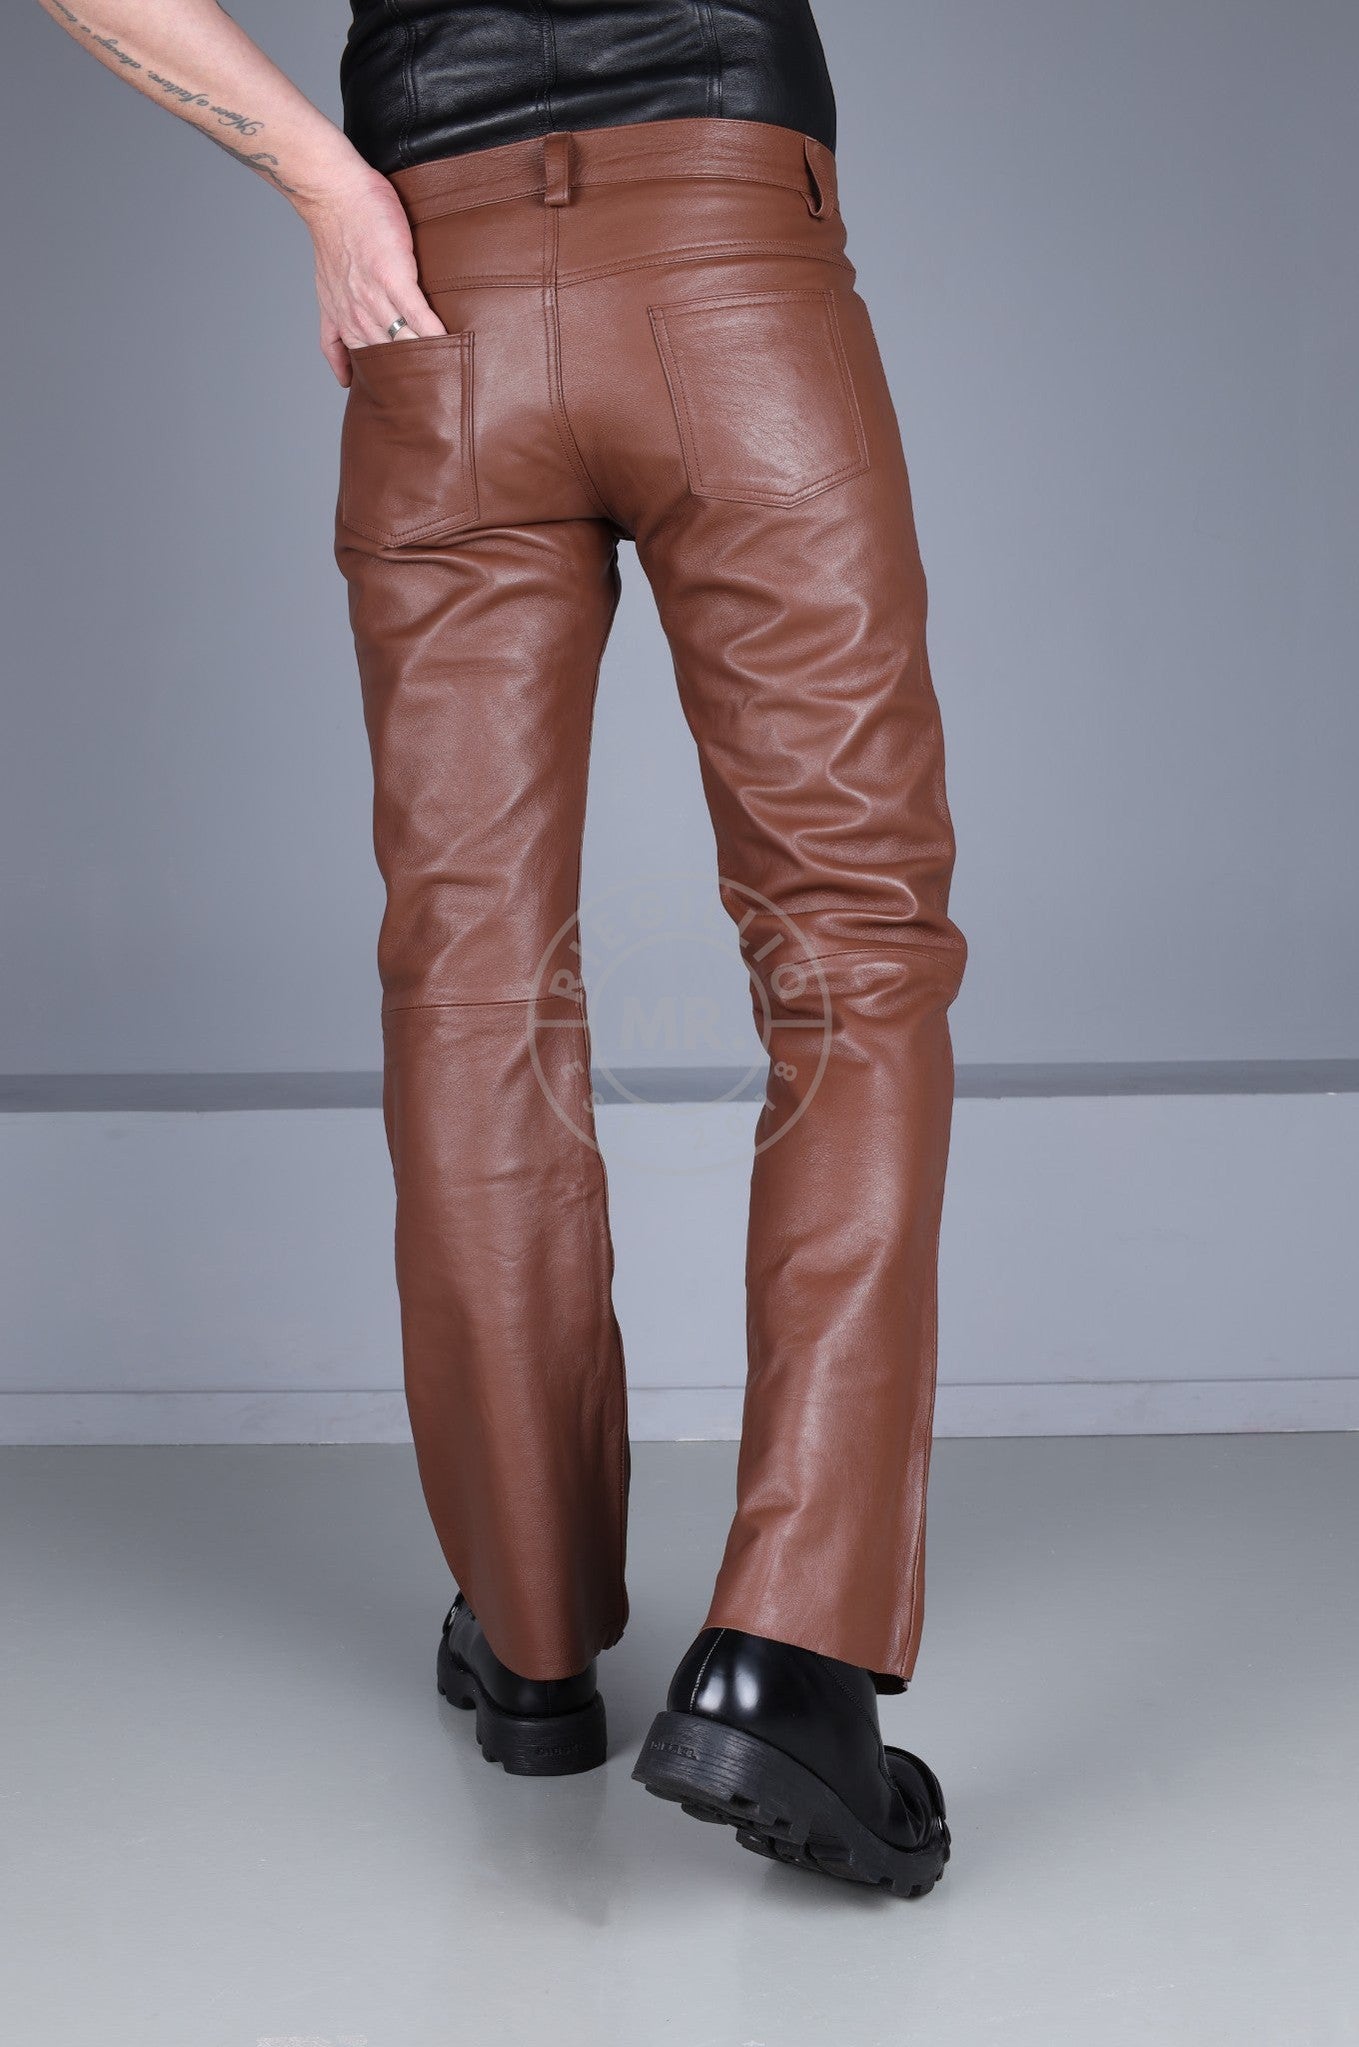 Cinnamon Brown Leather Bootcut Pants at MR. Riegillio